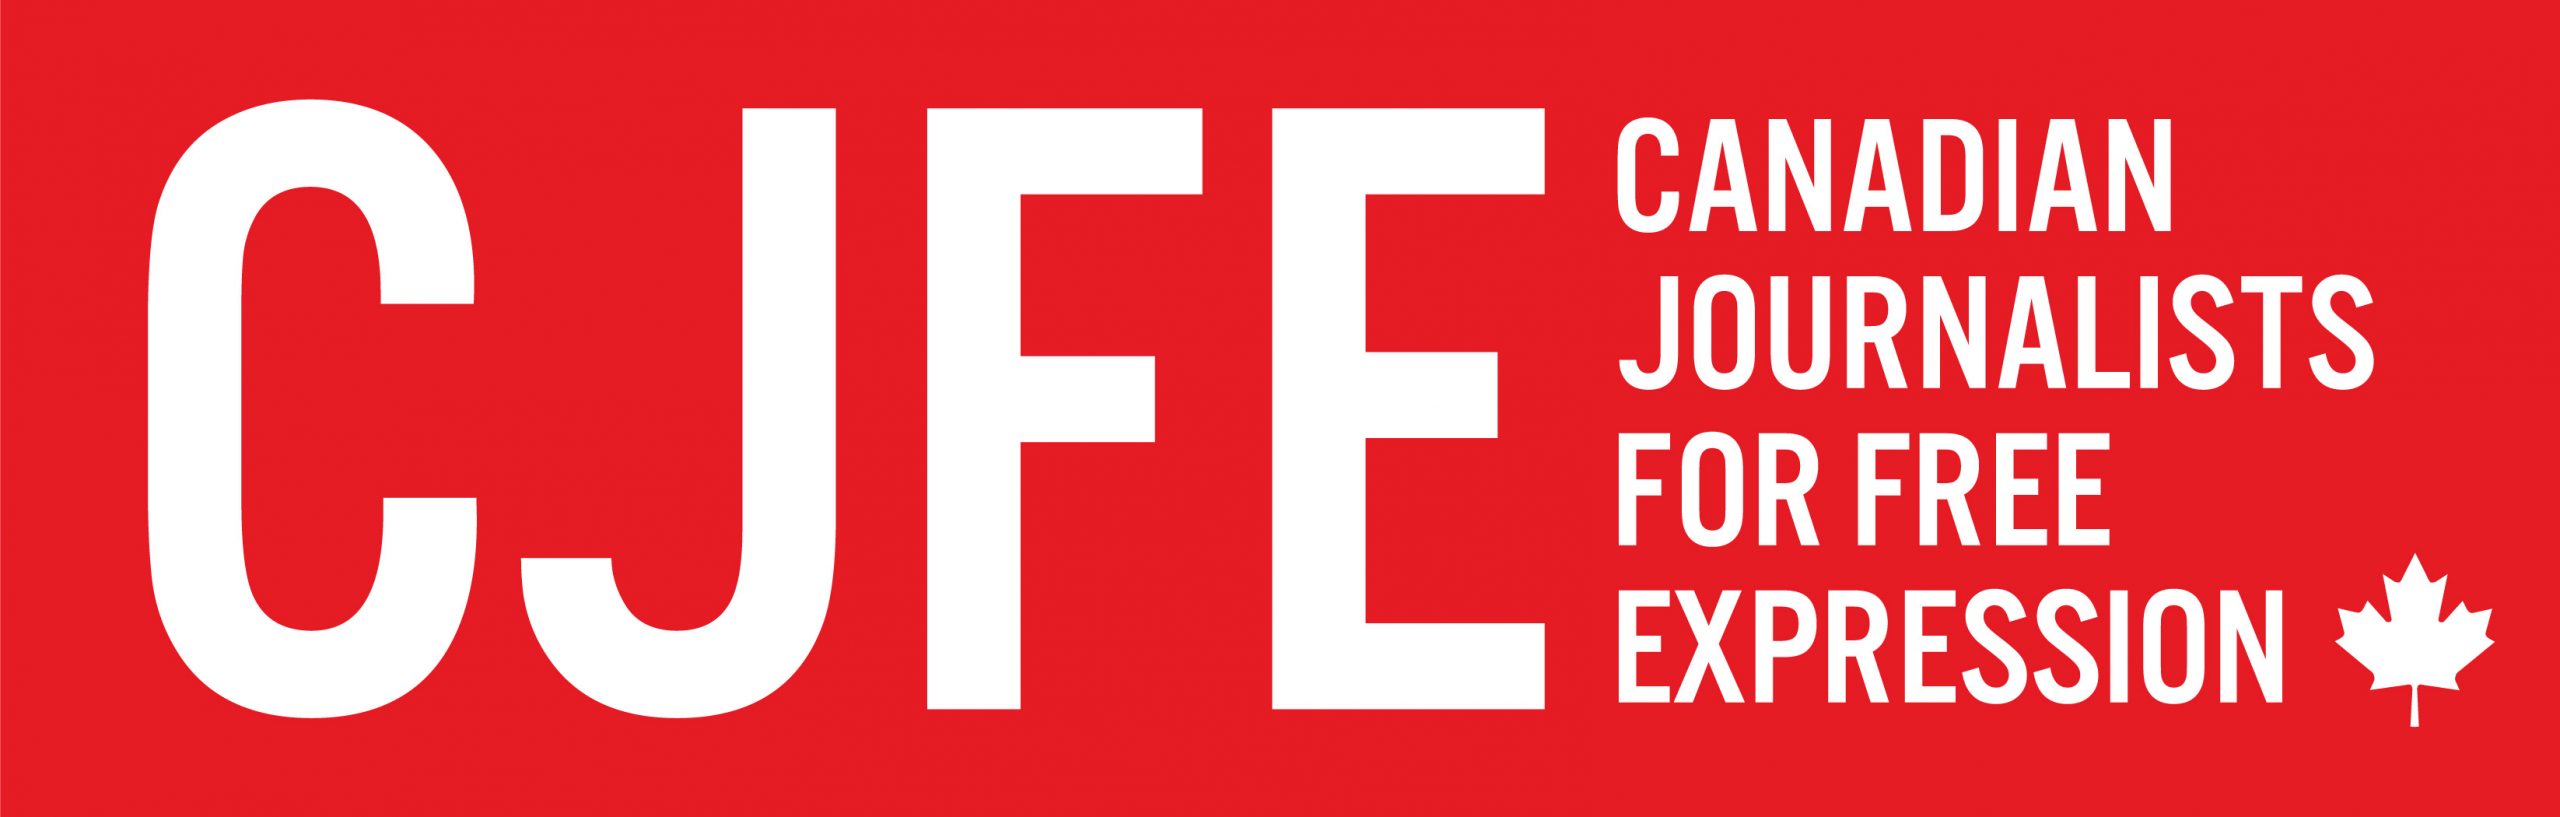 cjfe-logo